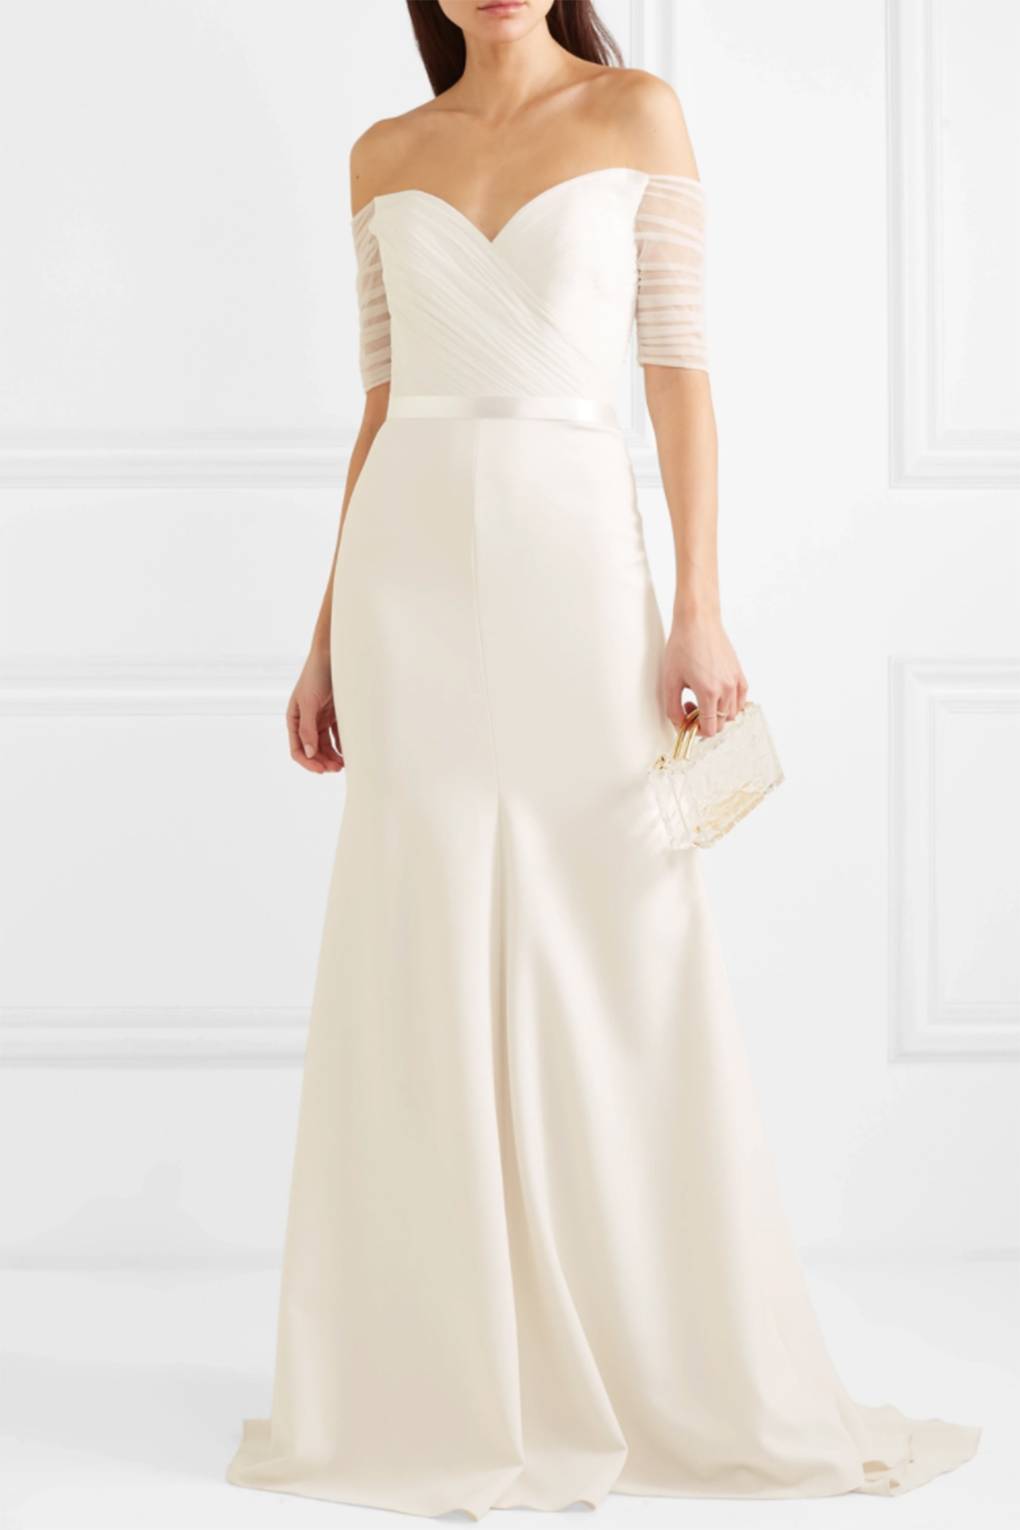 The Best Bardot Wedding Dresses To Buy Now Glamour Uk 5880